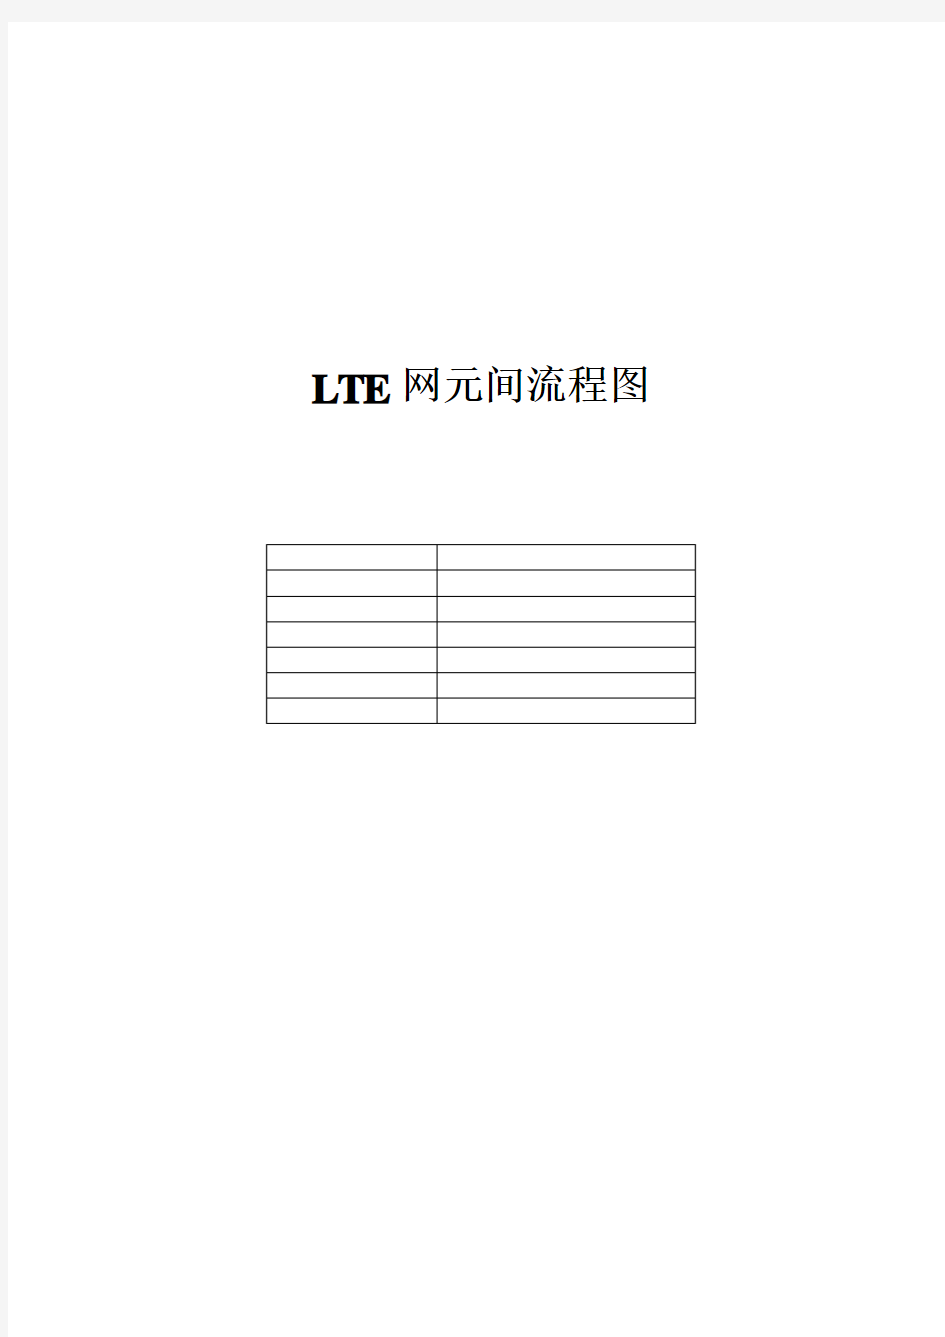 LTE网元间信令流程图